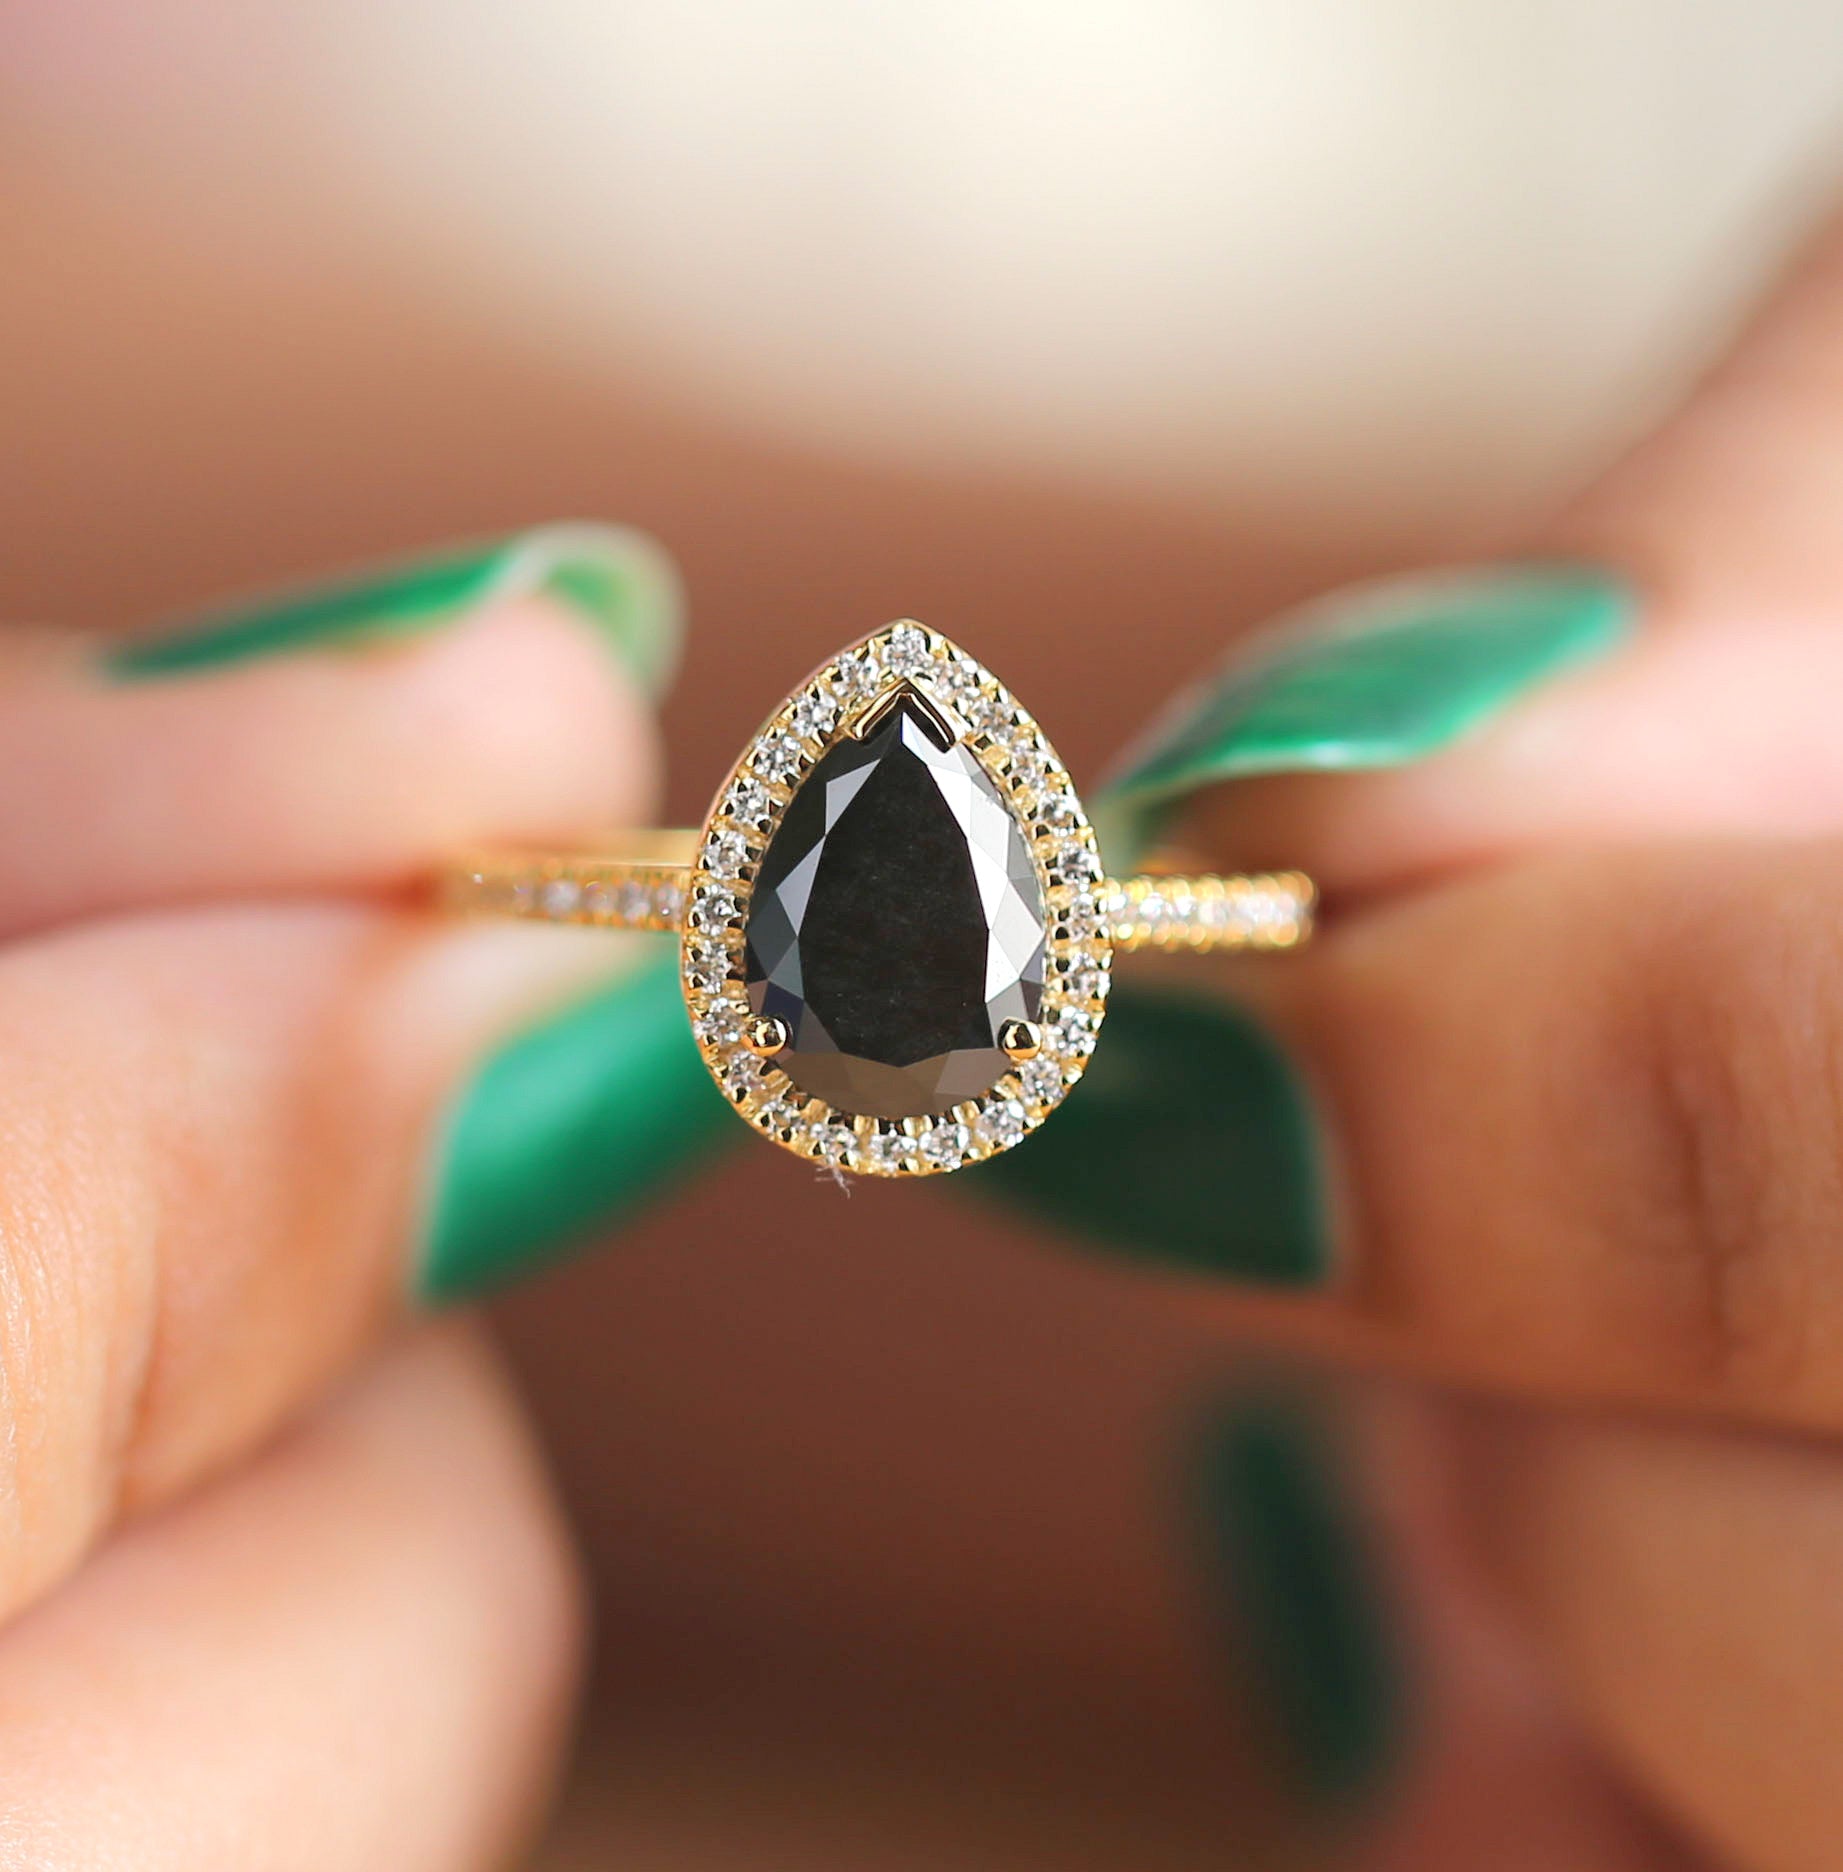 2.00 CT Black Diamond Ring, Pear Cut Diamond Ring, Engagement Ring, Rose Cut Diamond Ring, 14K Yellow Gold Ring, Wedding Ring, KD237